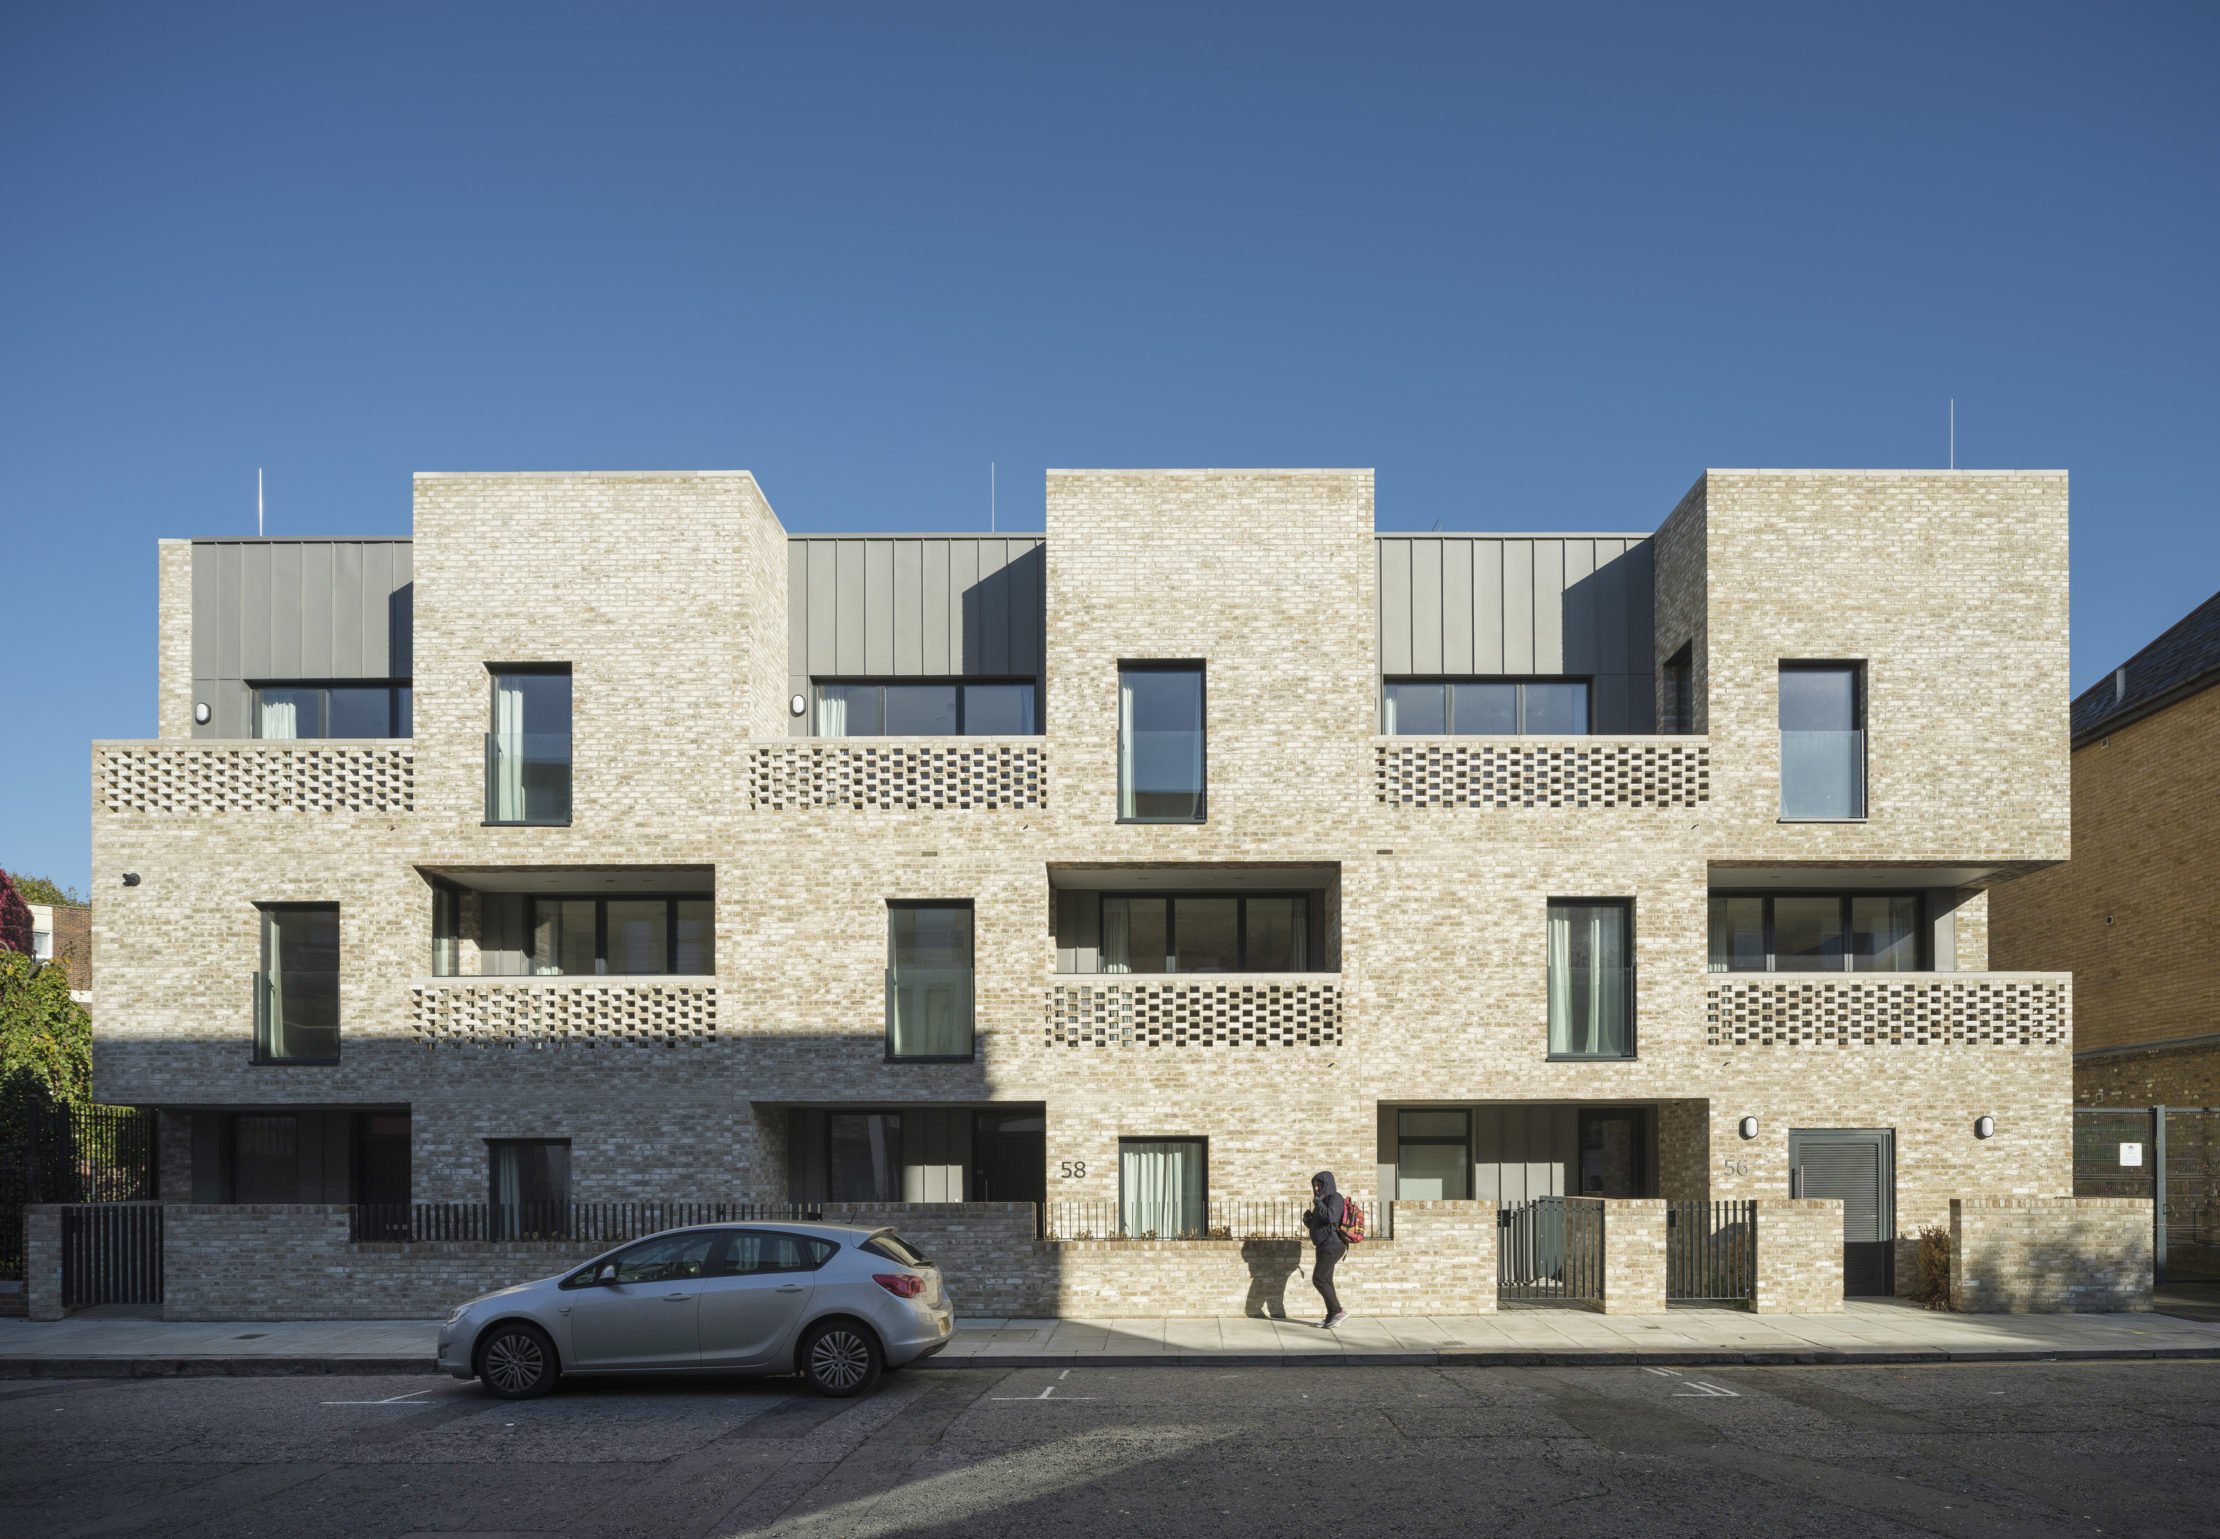 Middle-Row-Housing-Southern-Row-view-Residential-Penoyre-Prasad-2220x0-c-default.jpg